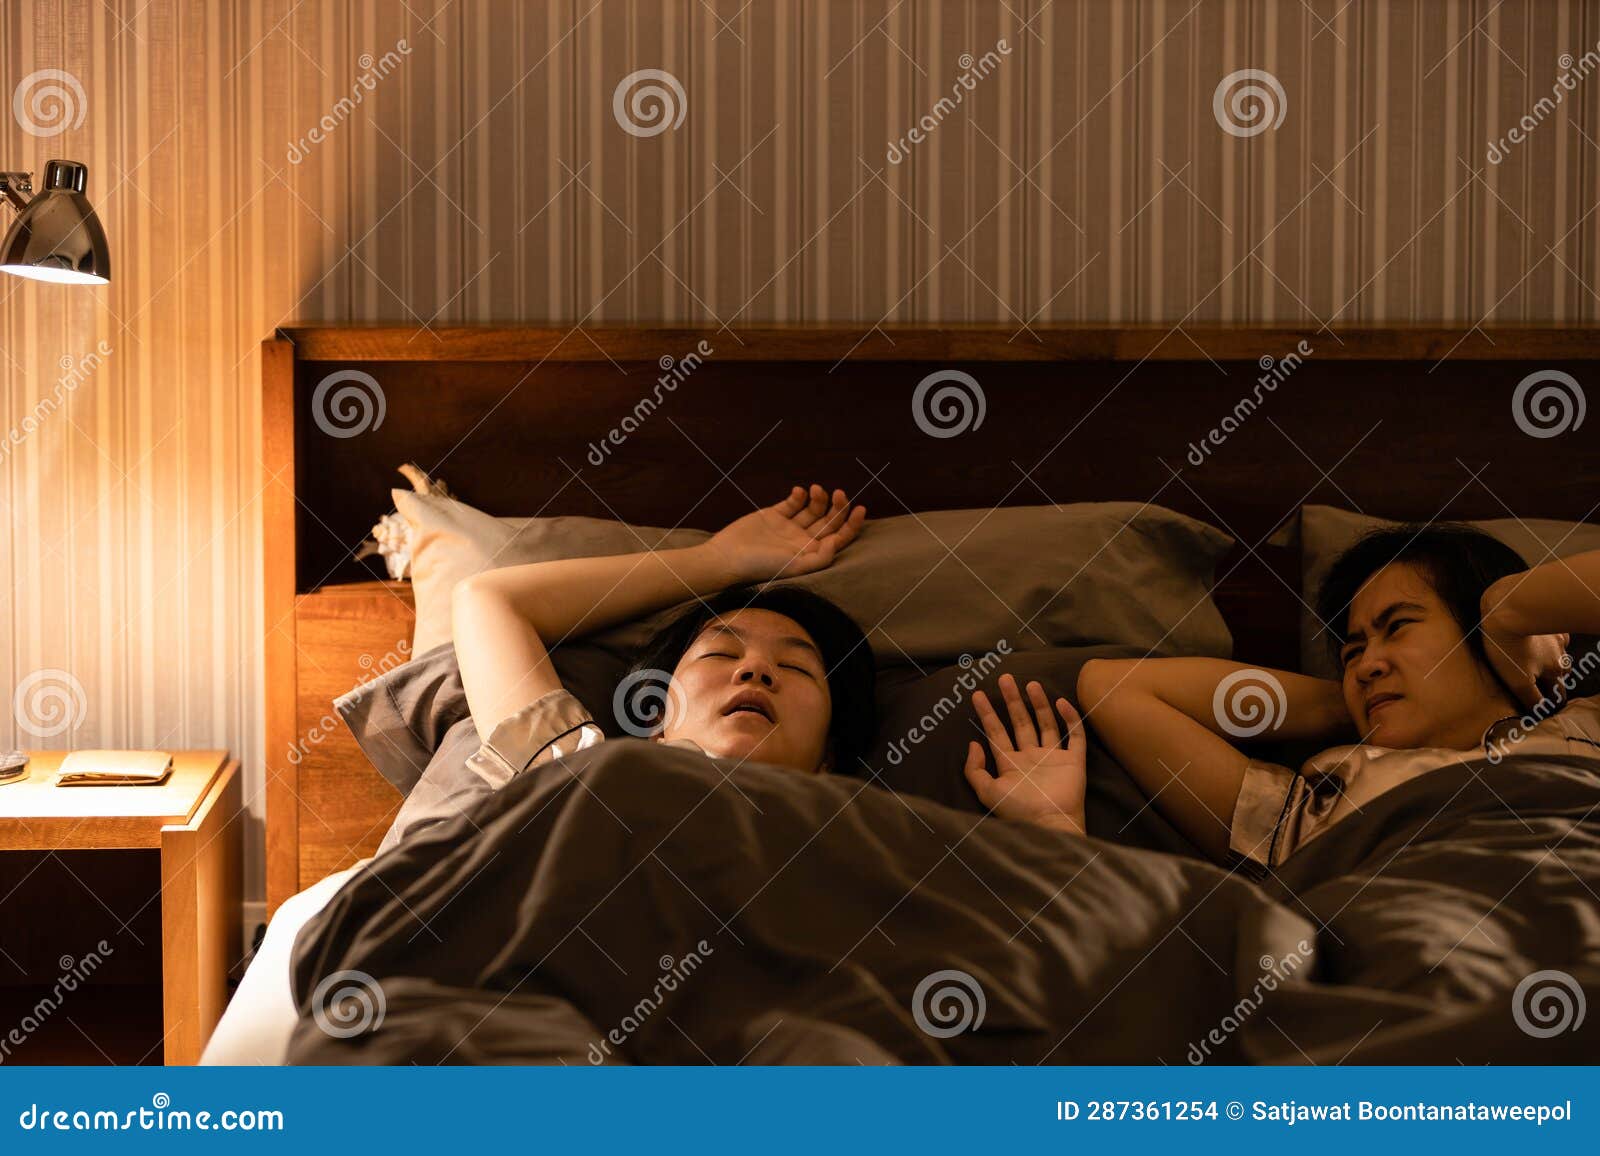 asian teenage girl snoring in bed having chronic nasal congestion,symptom of obstructive sleep apnea,making a snorting or grunting